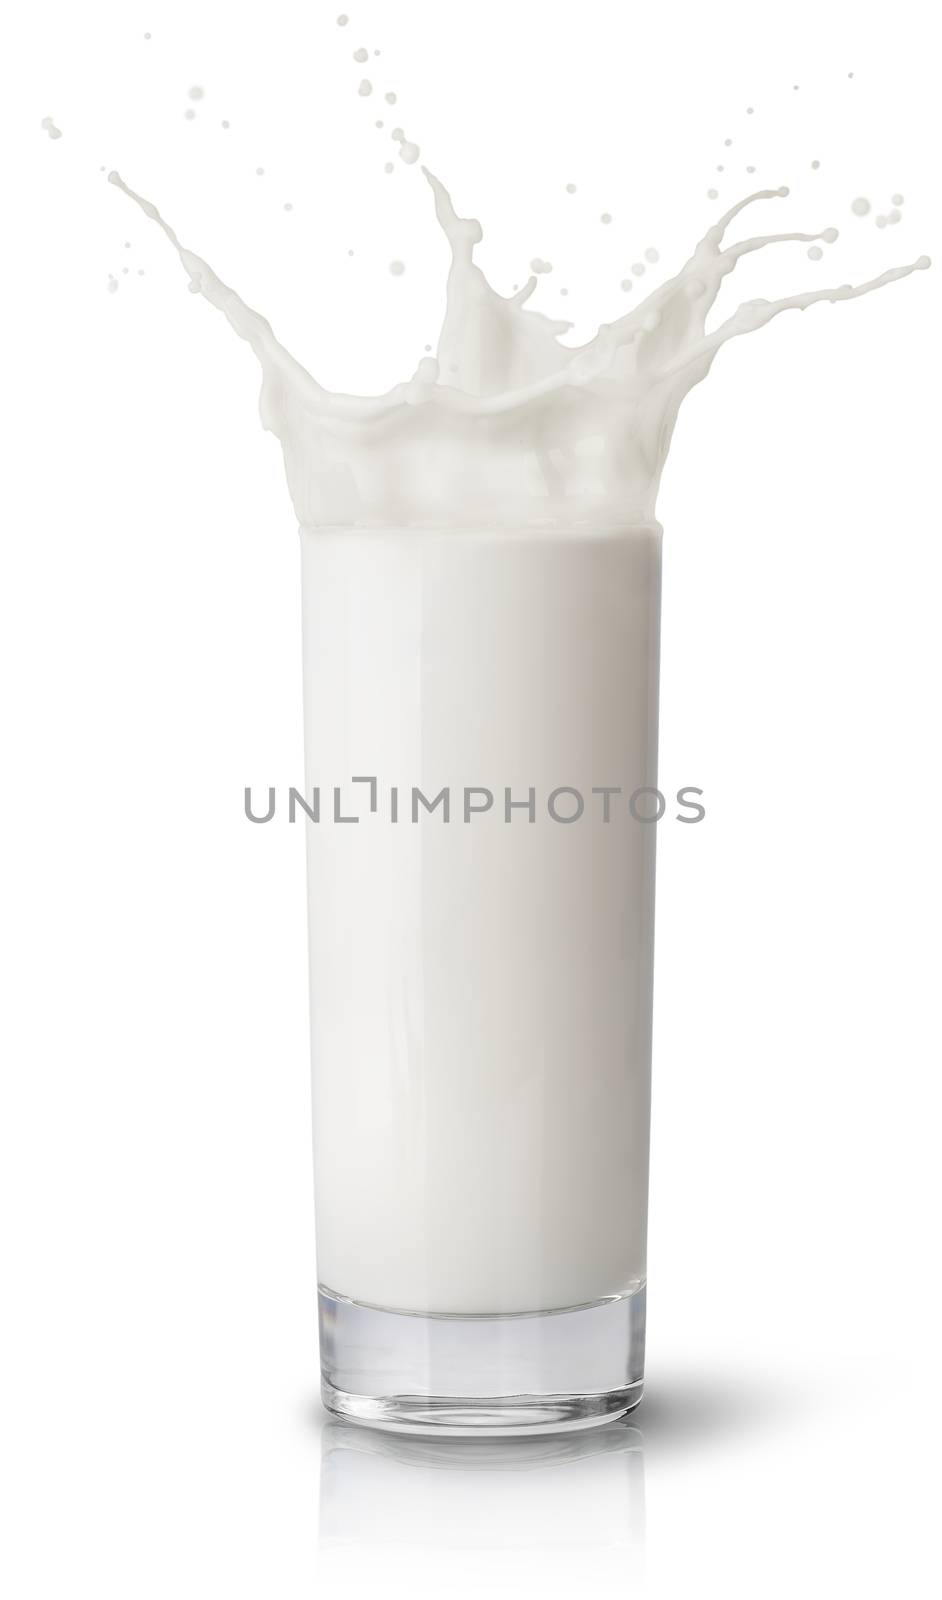 Milk splashing from glass isolated on white background